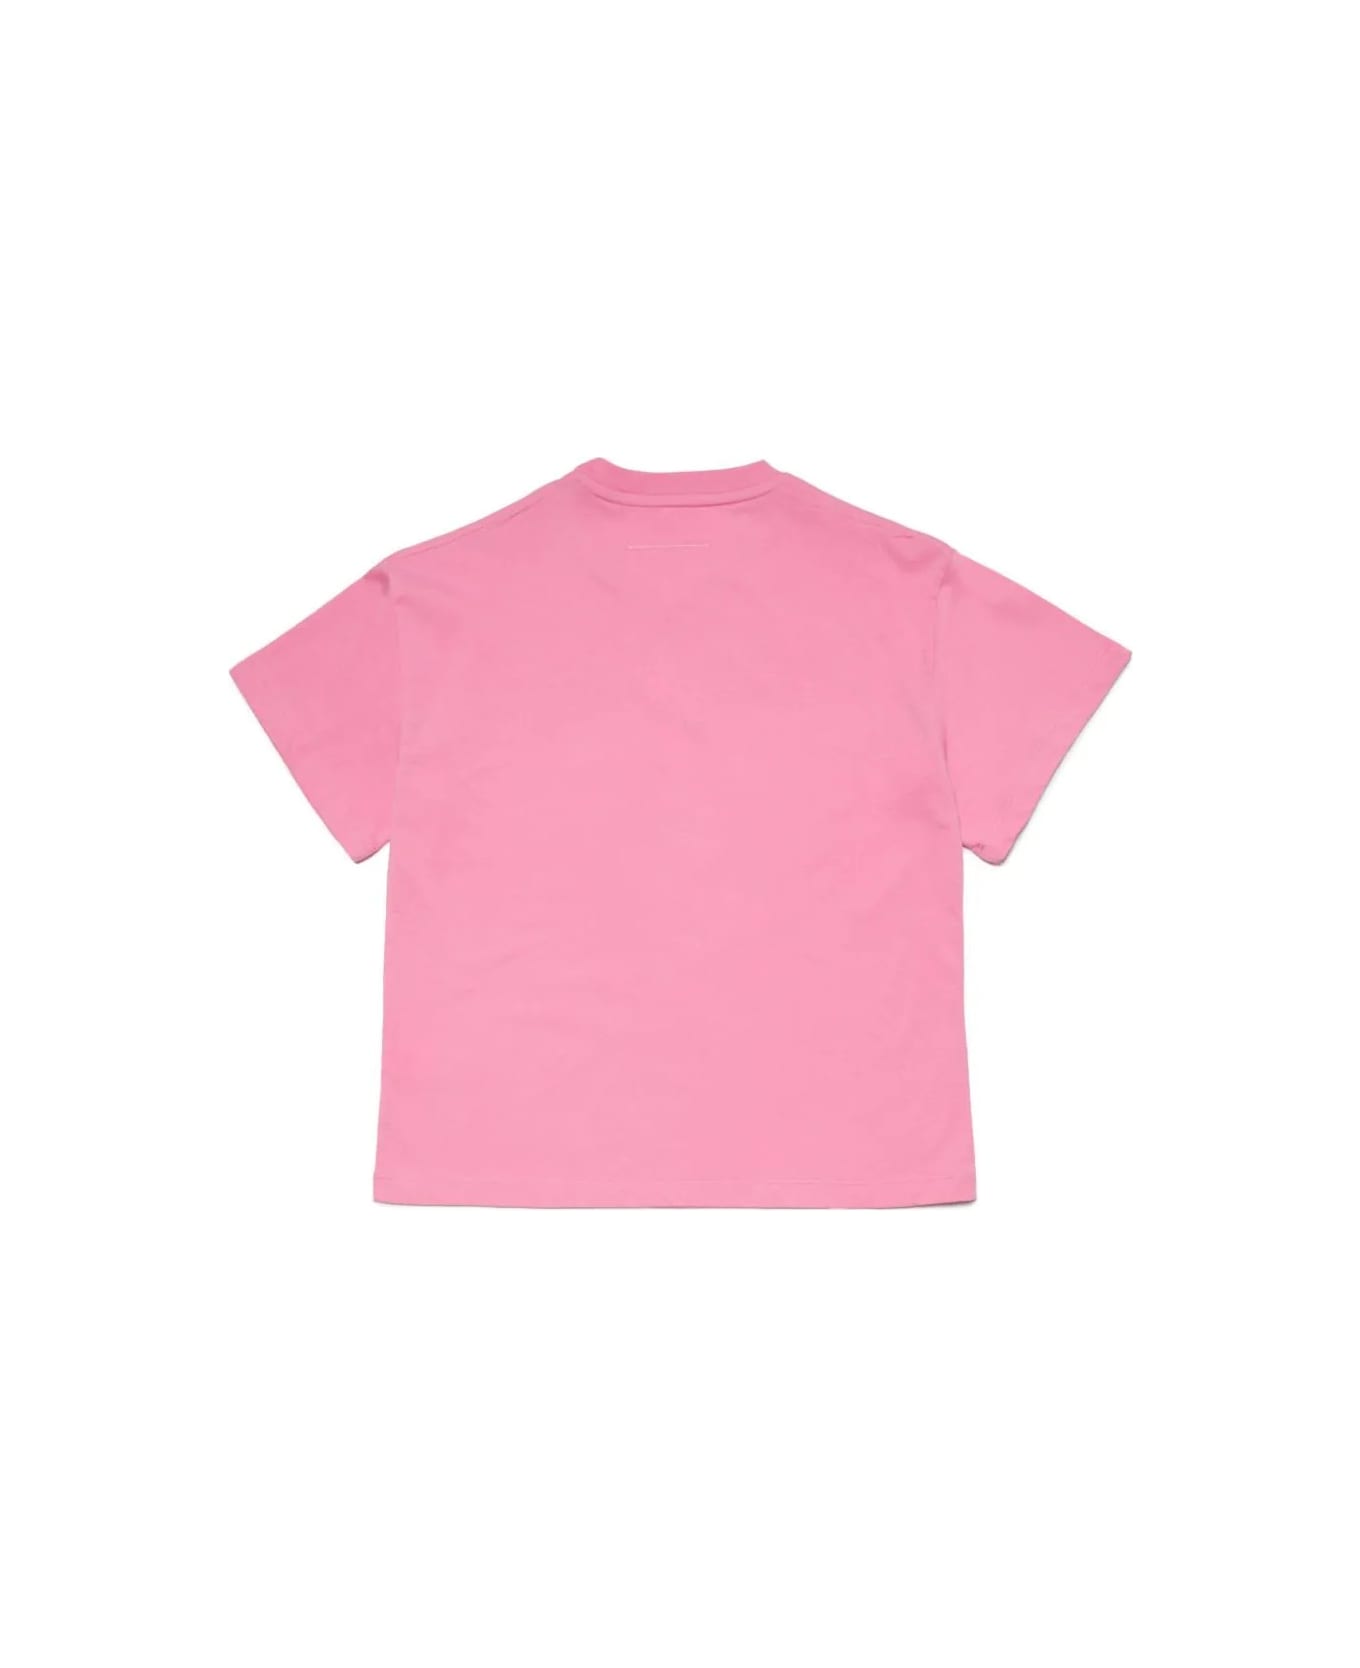 MM6 Maison Margiela T-shirt With Print - Pink